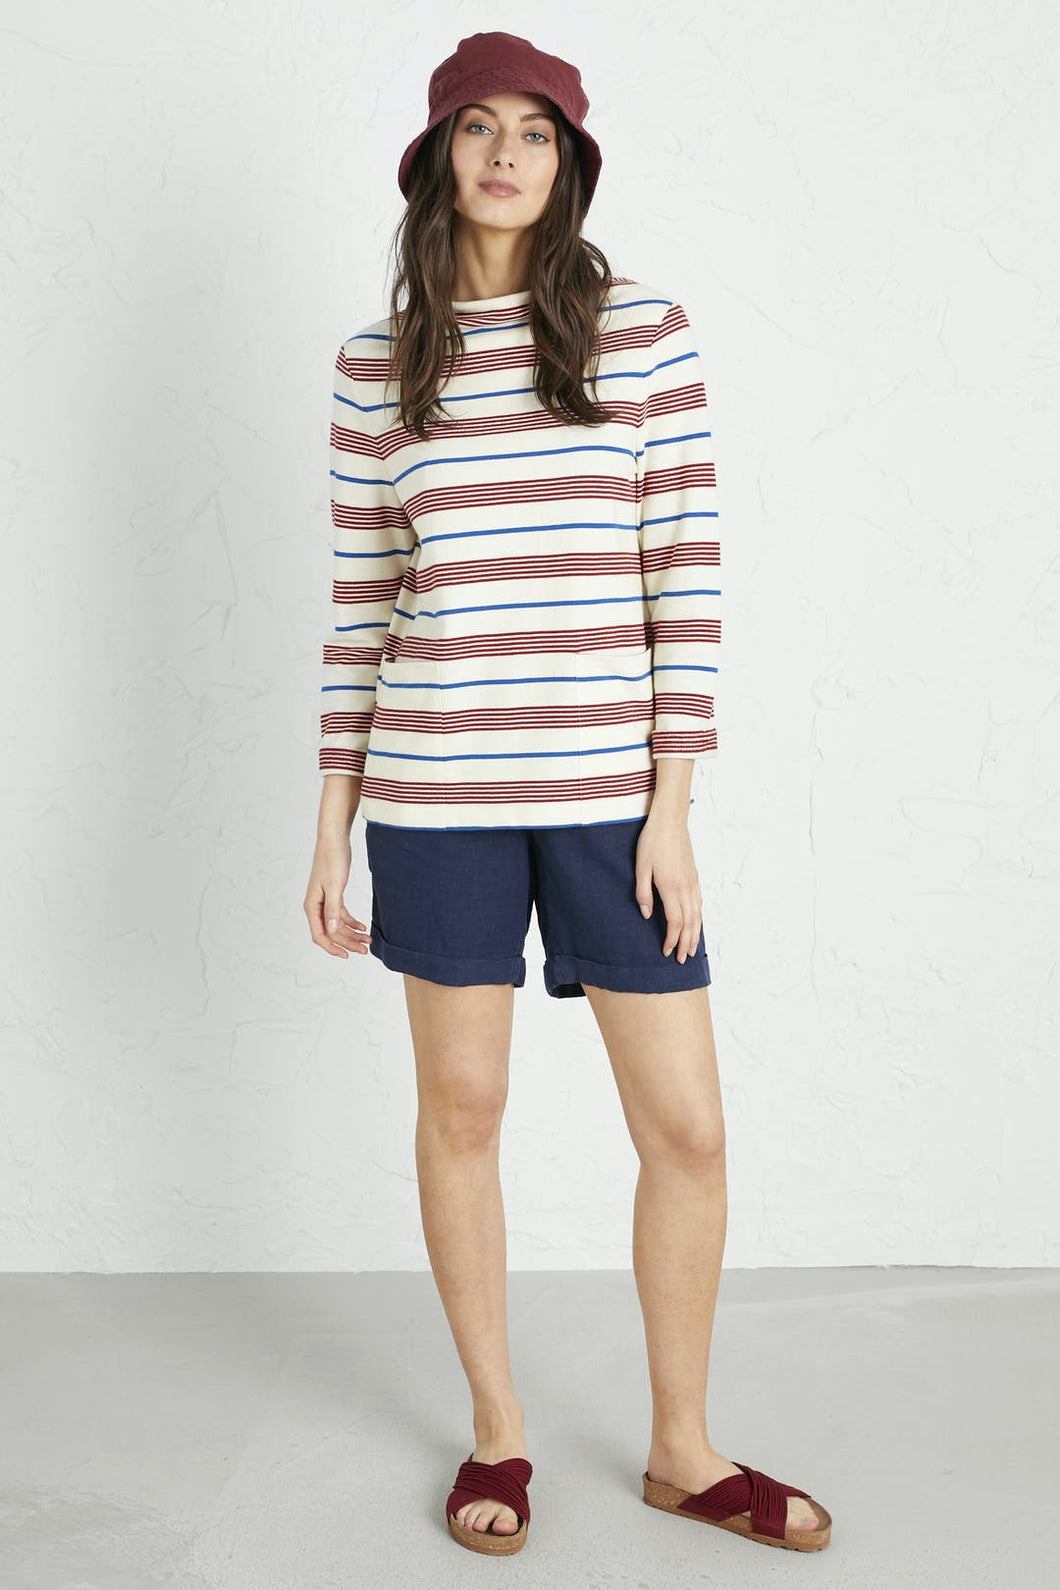 Seasalt Oceangoing sweatshirt in stripe Ivory, red and navy - CW CW 